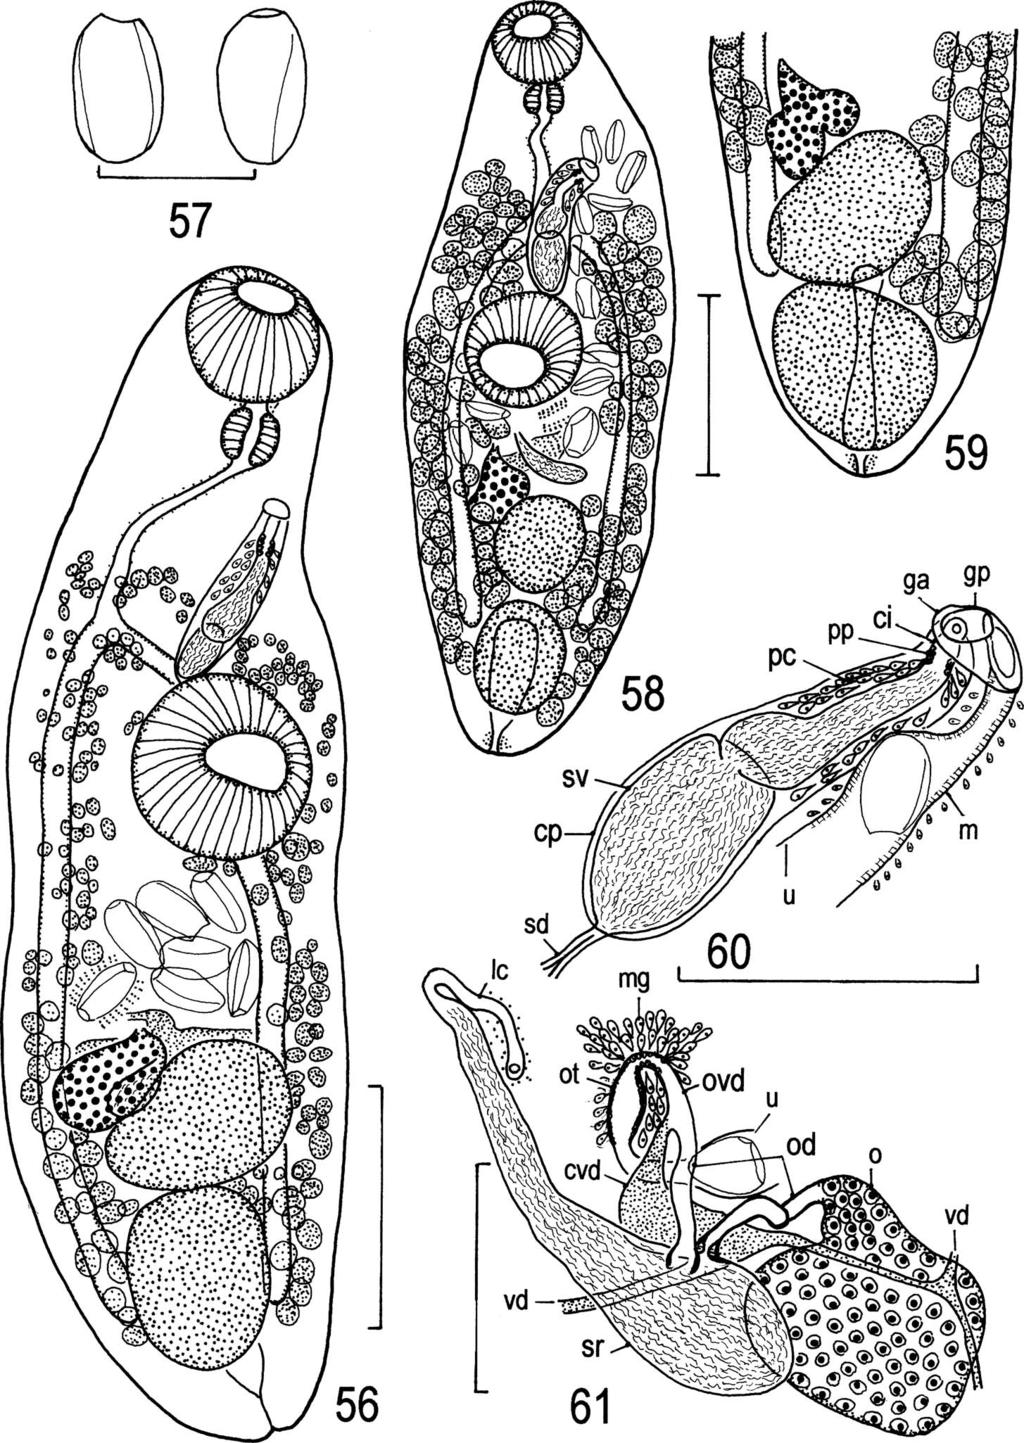 46 T. Shimazu et al. Figs. 56 61. Neoplagioporus elongatus (continued). Specimens of orientalis type. 56, holotype (MPM Coll. No.